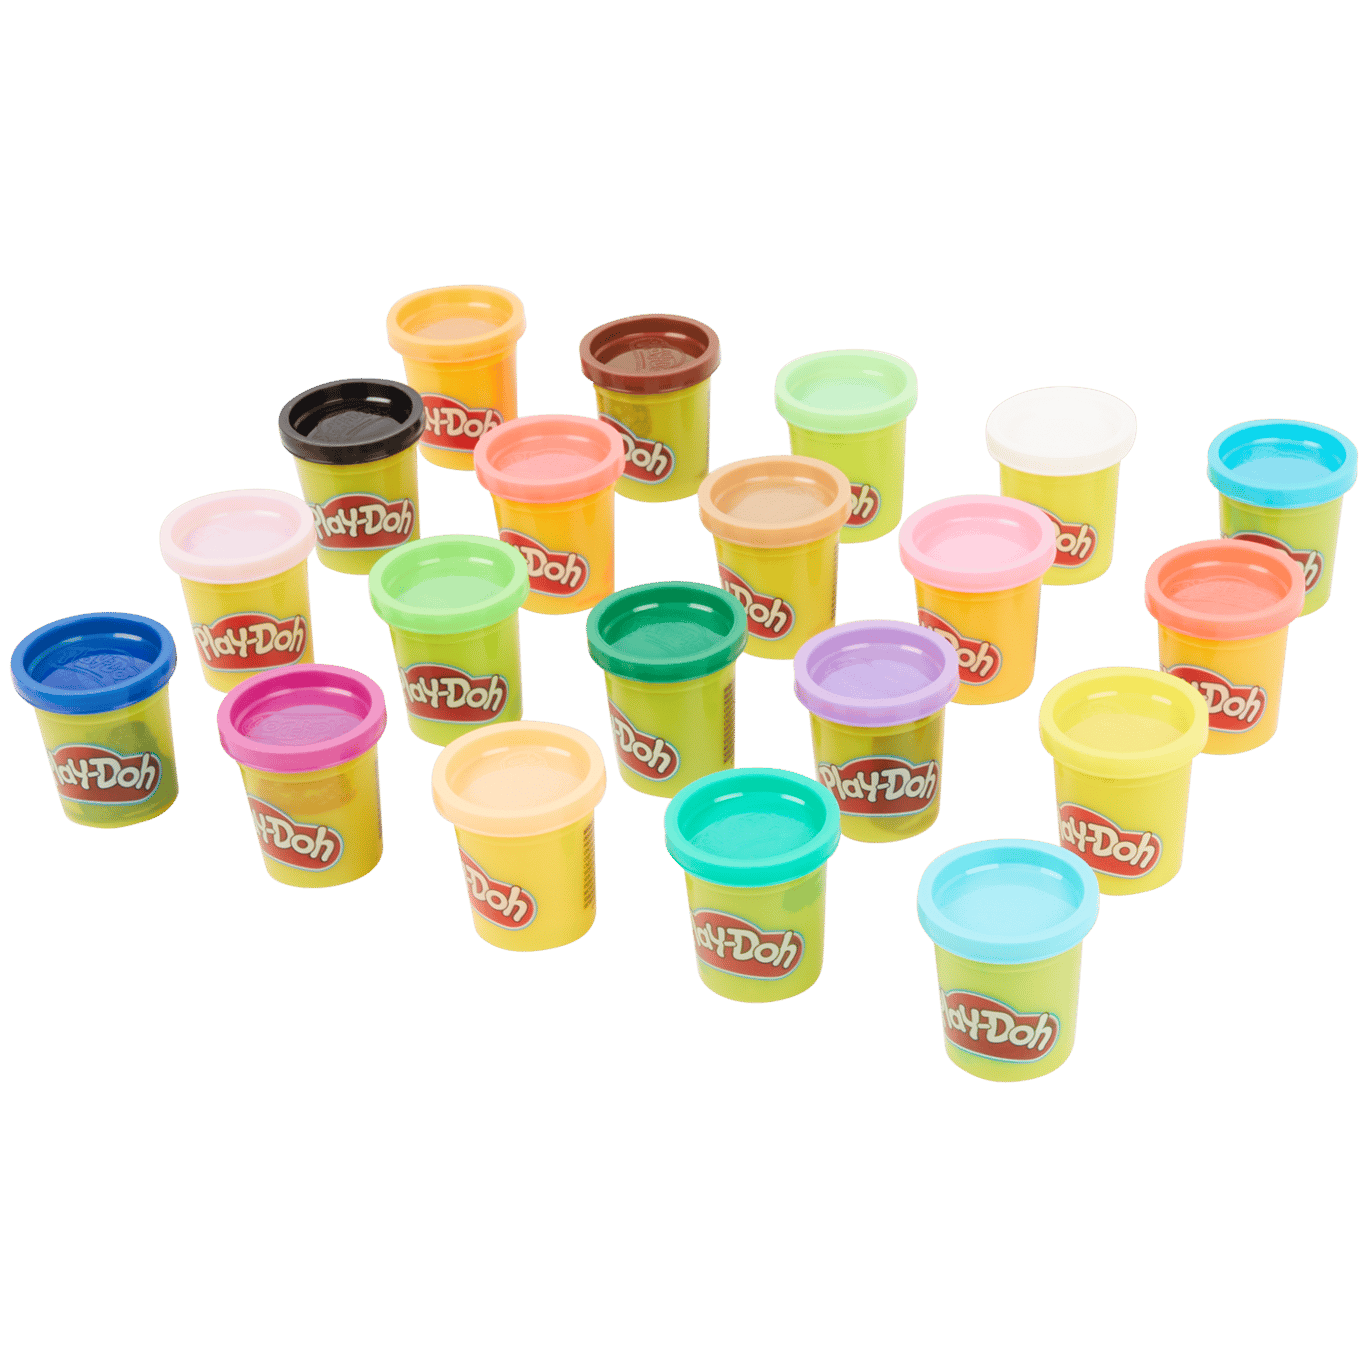 Coffret Play-Doh Collection multicolore